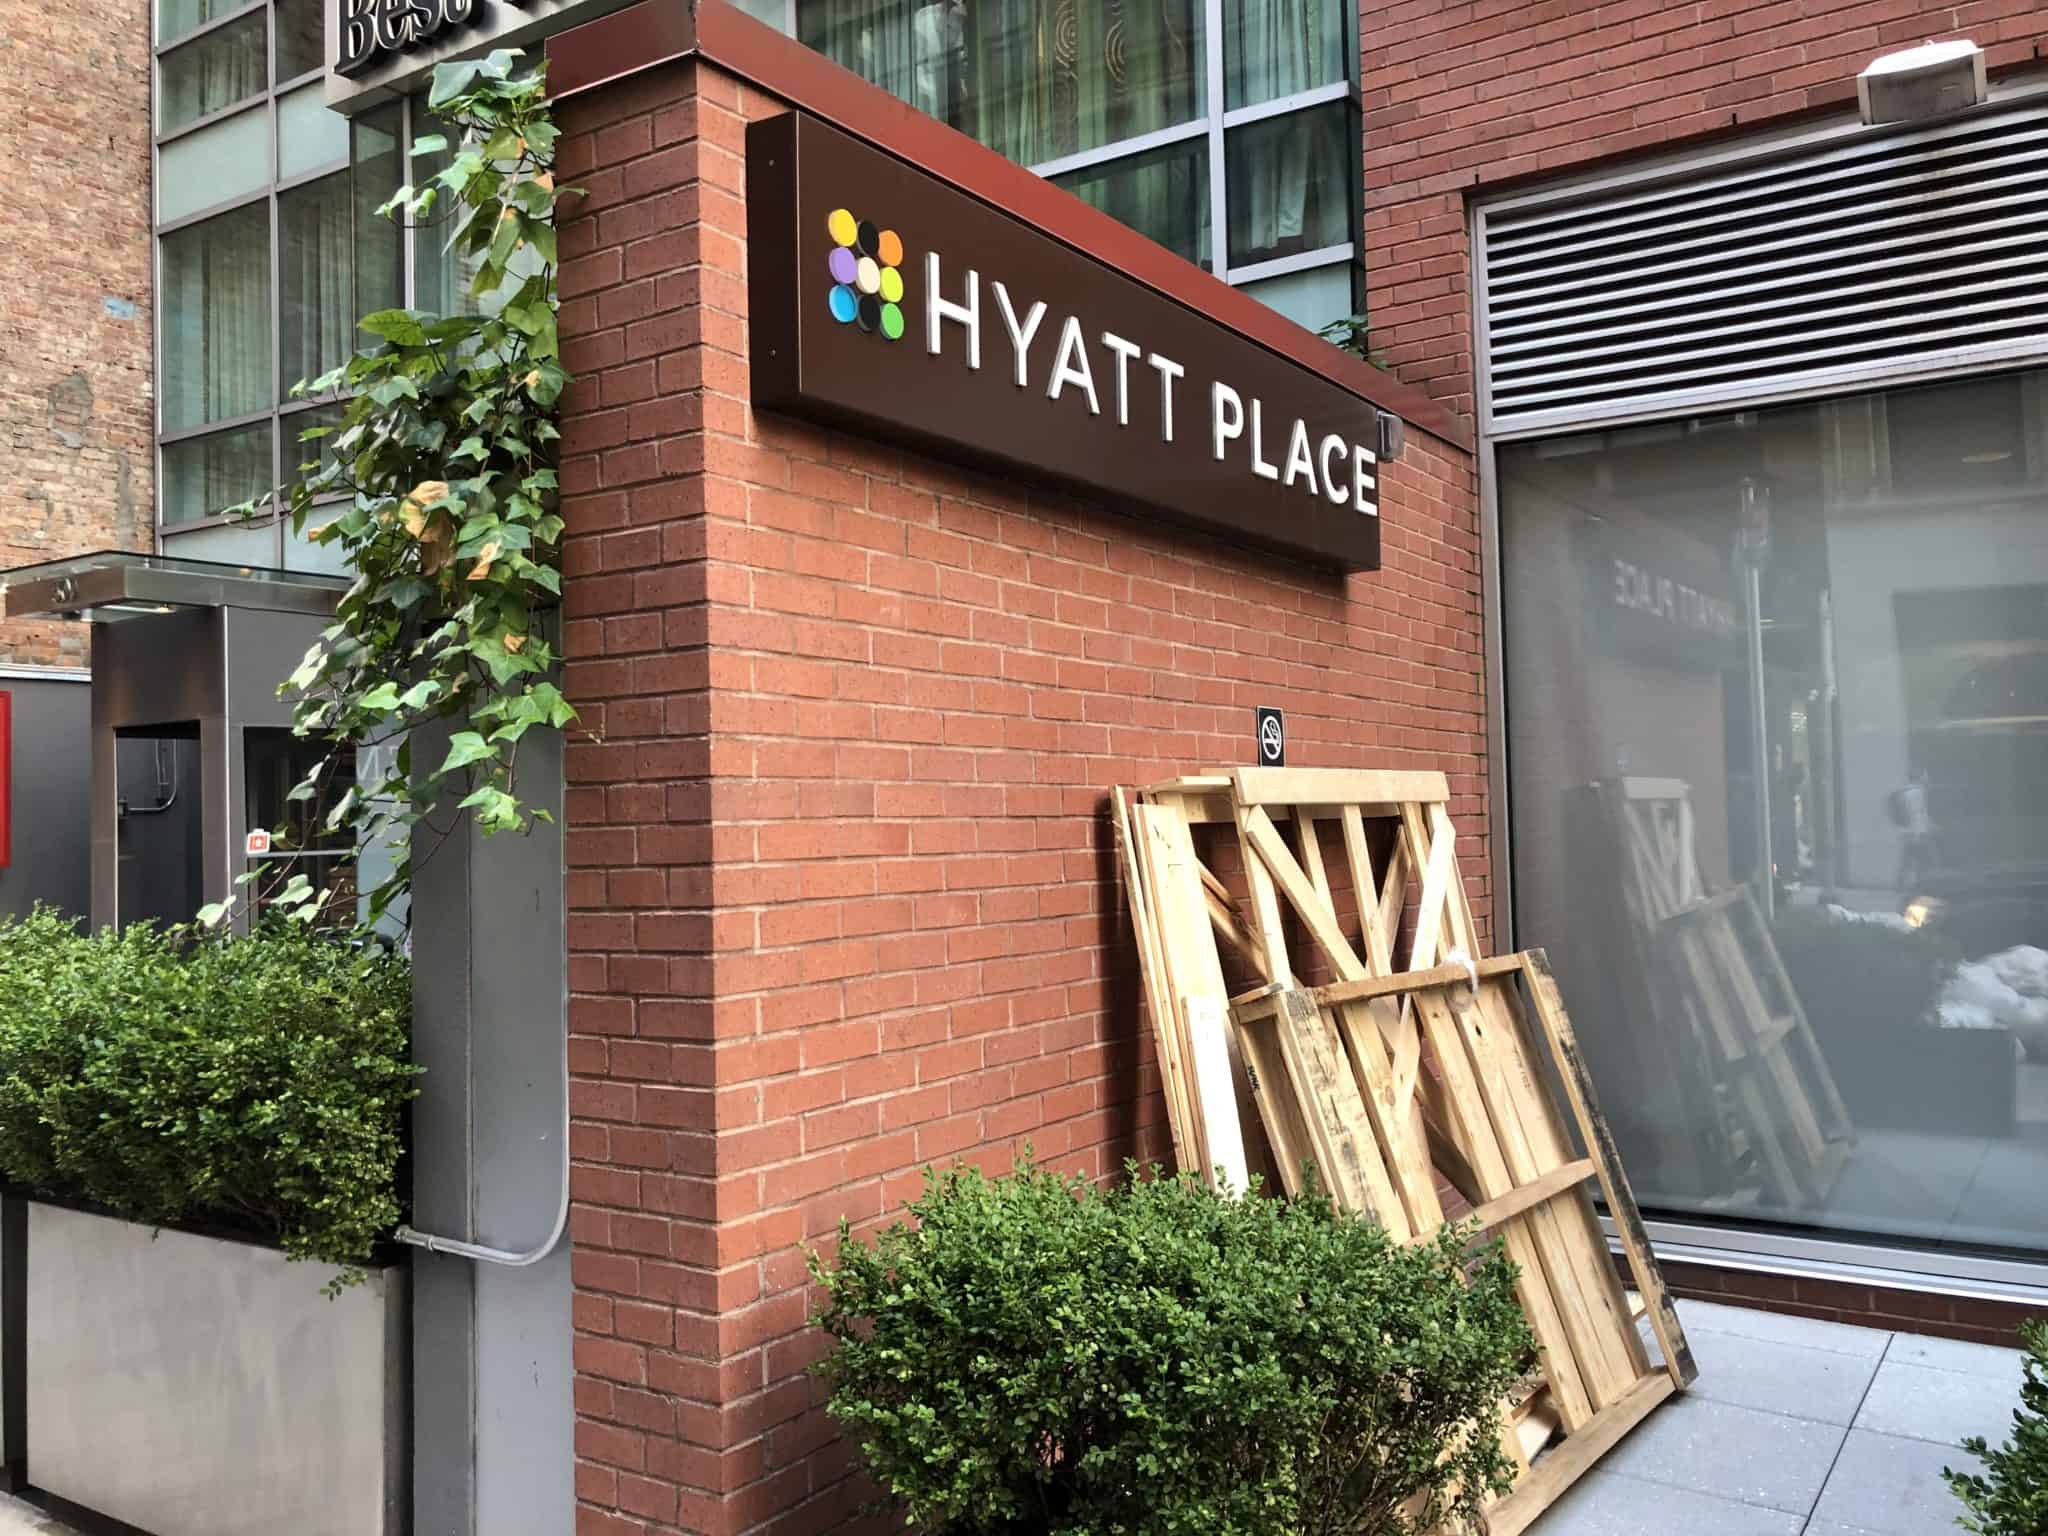 Hyatt Place New York Midtown South Name Plate